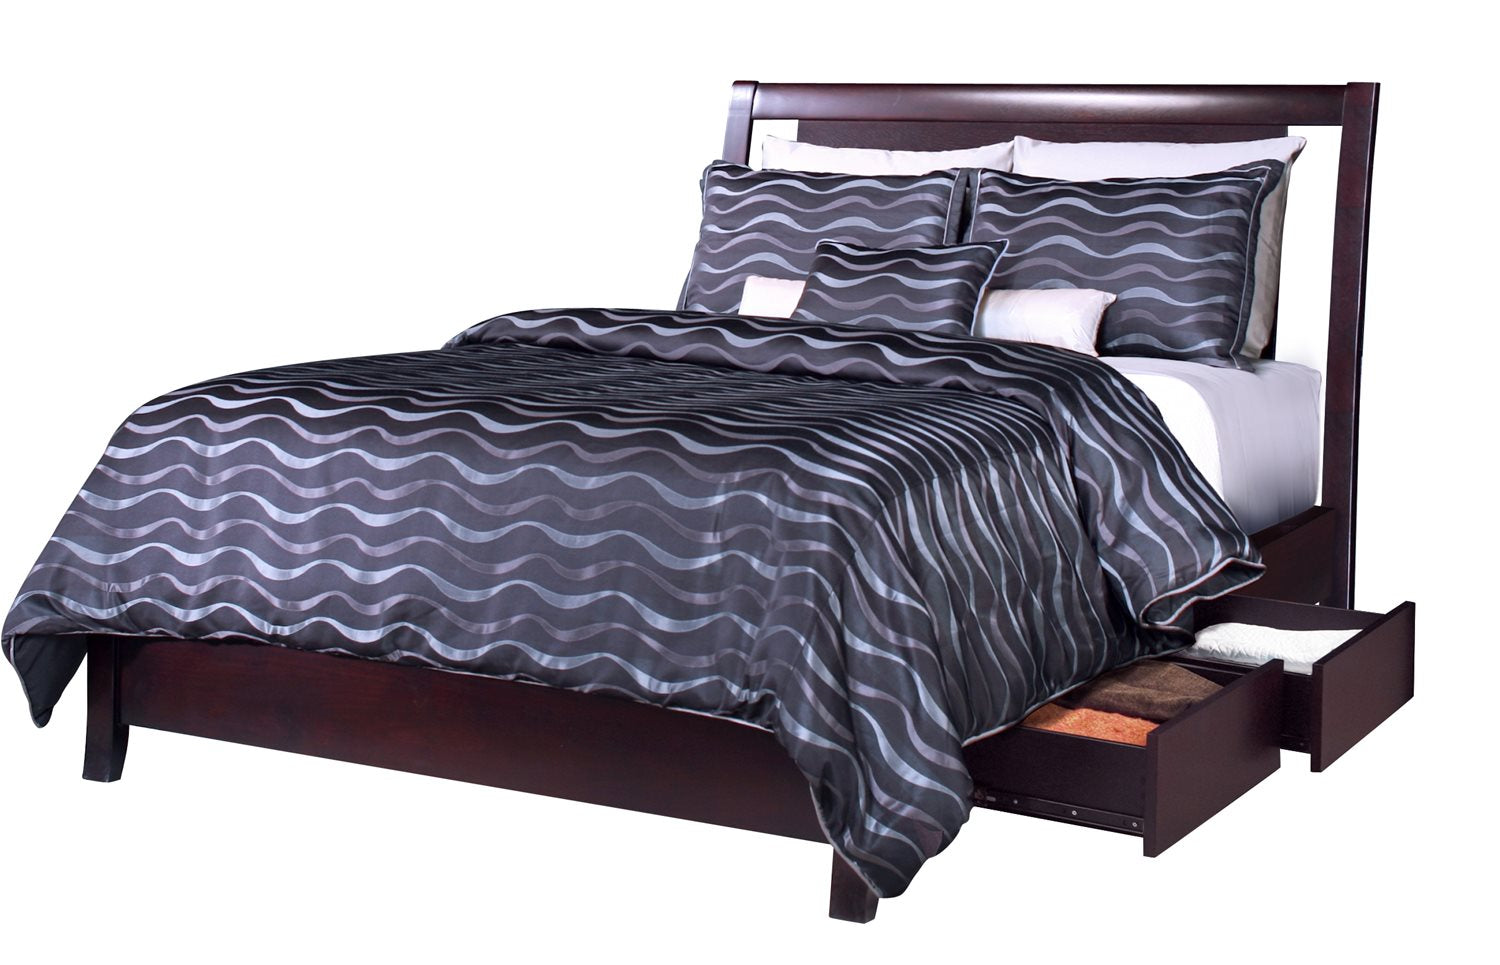 Modus Furniture Modus Nevis Cal King Storage Bed in Espresso